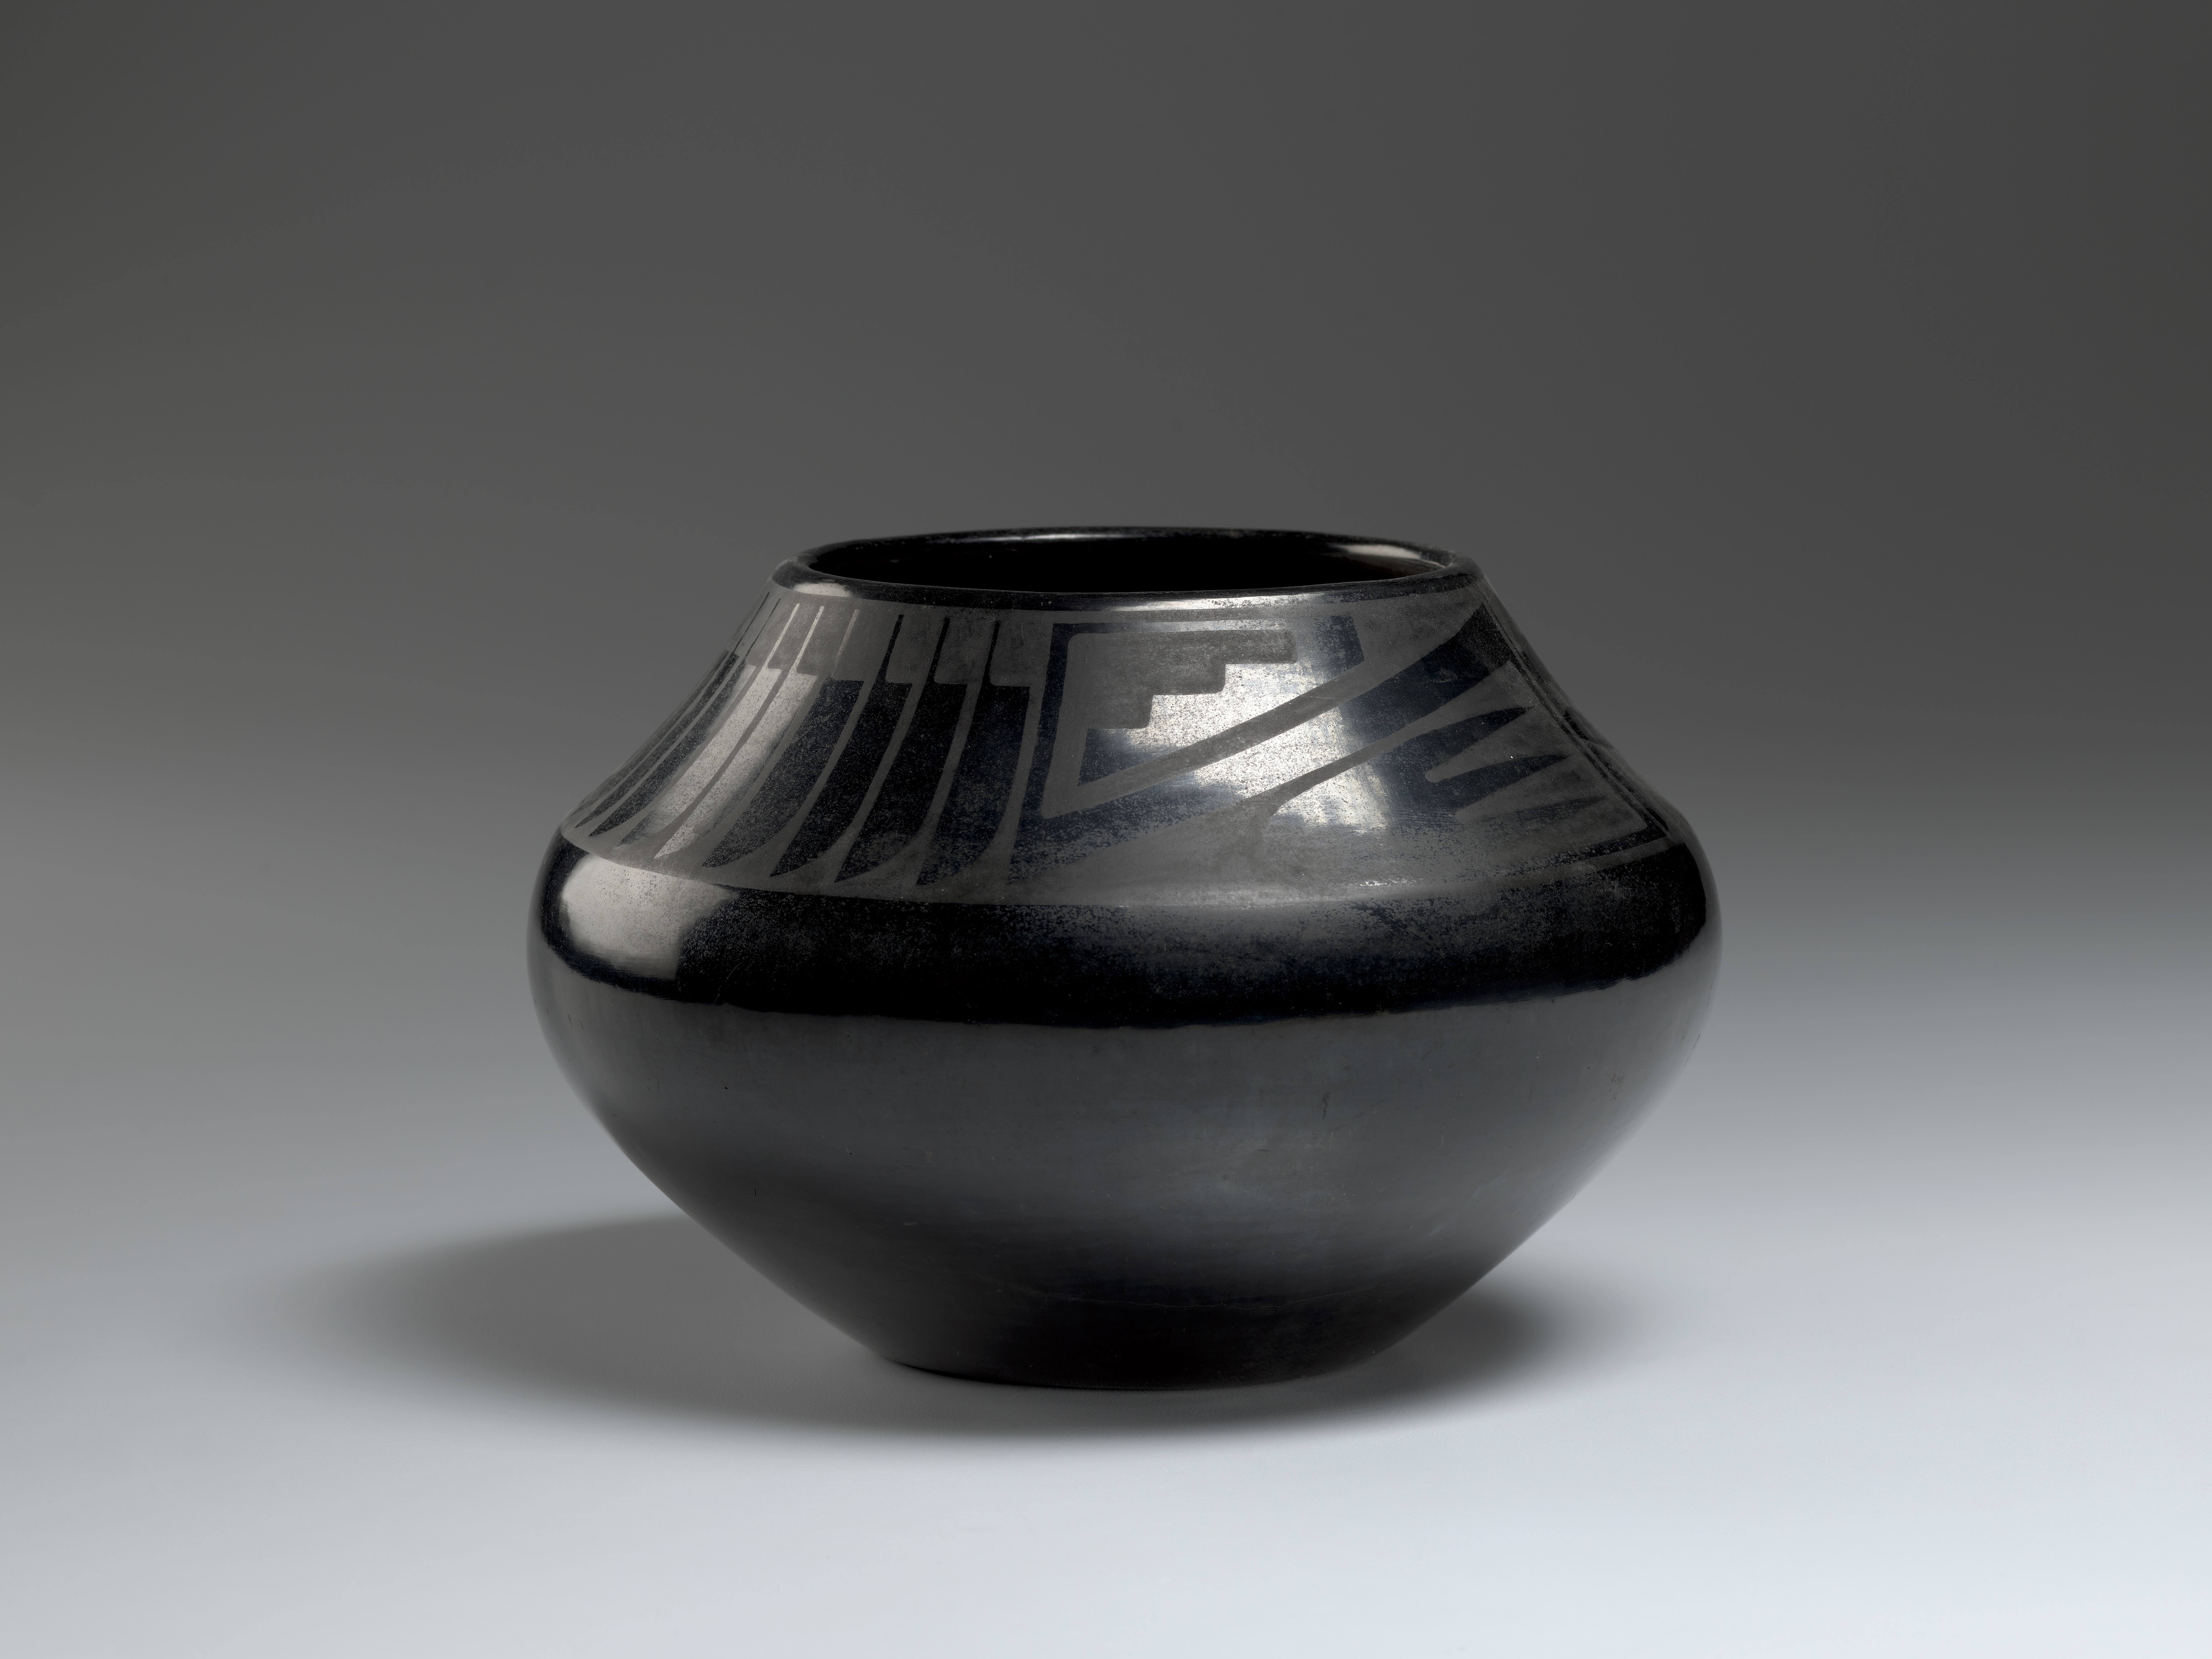 A shiny black bowl with matte black designs around the top rim.